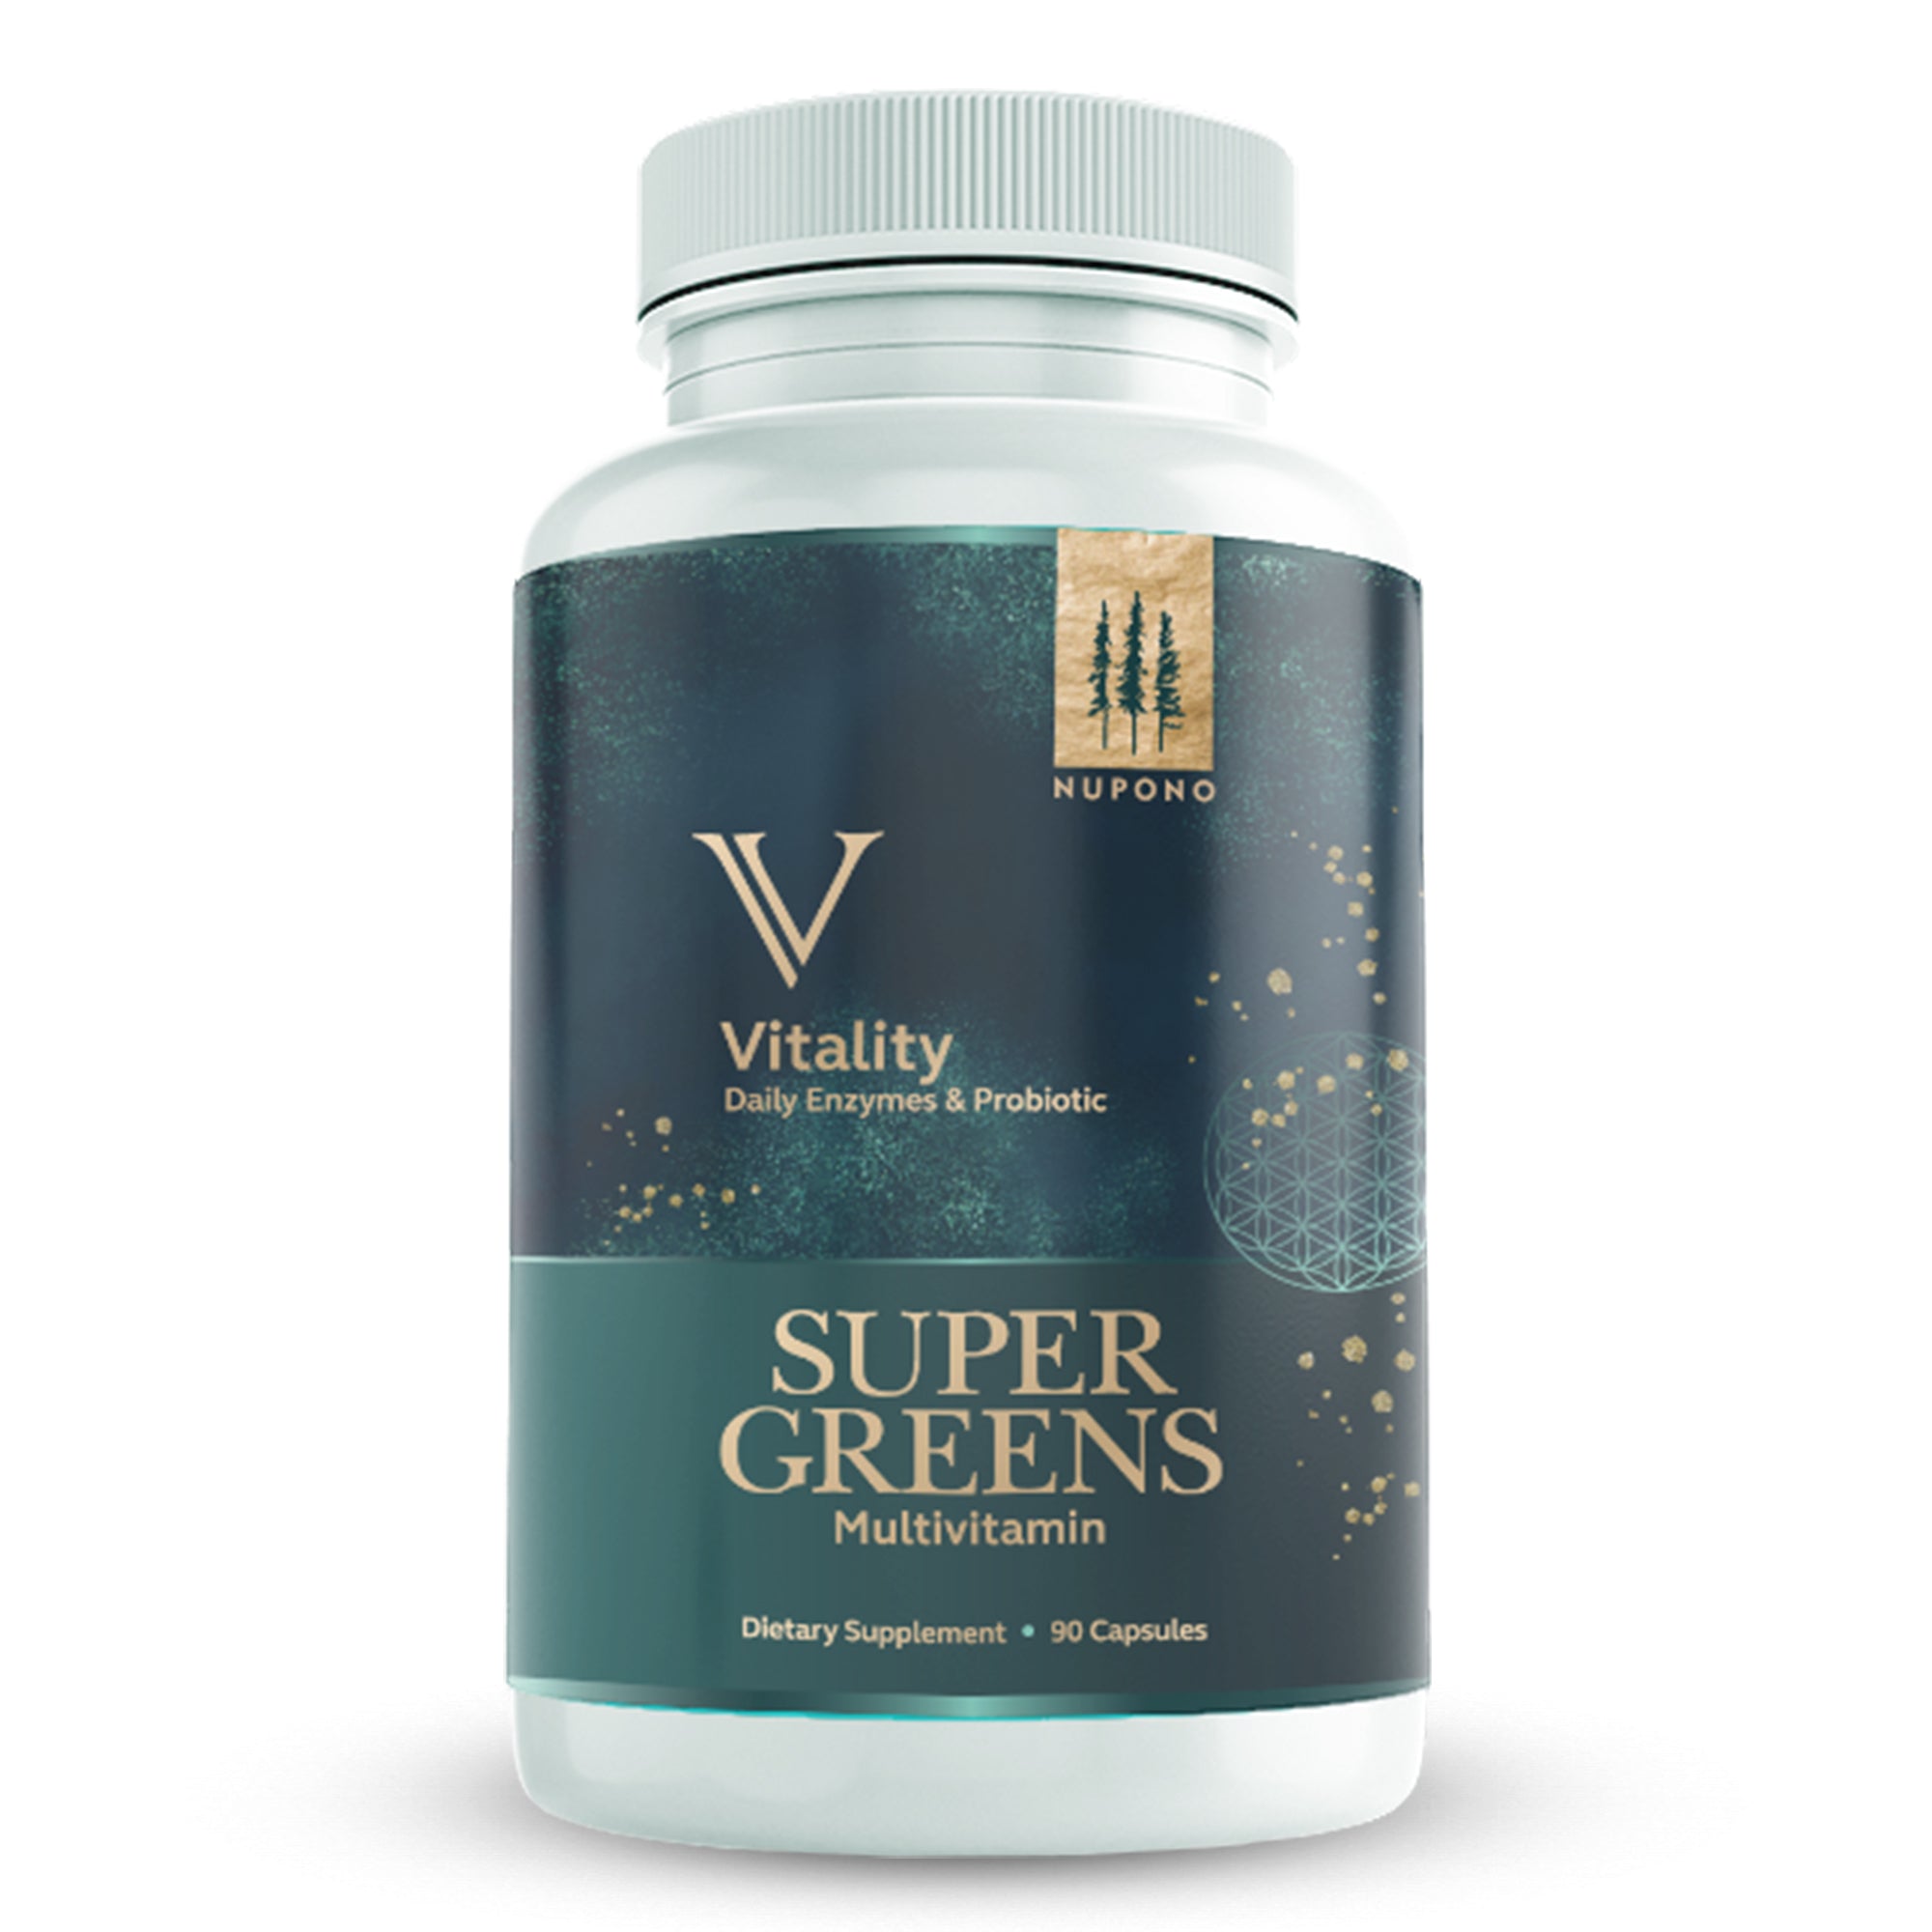 Vegan Multivitamin 90 Tablets - Multivitamin and Mineral Complex, Supports Overall Health & Wellness, Vitamin A, C, D-3, E, Thiamin, Niacin